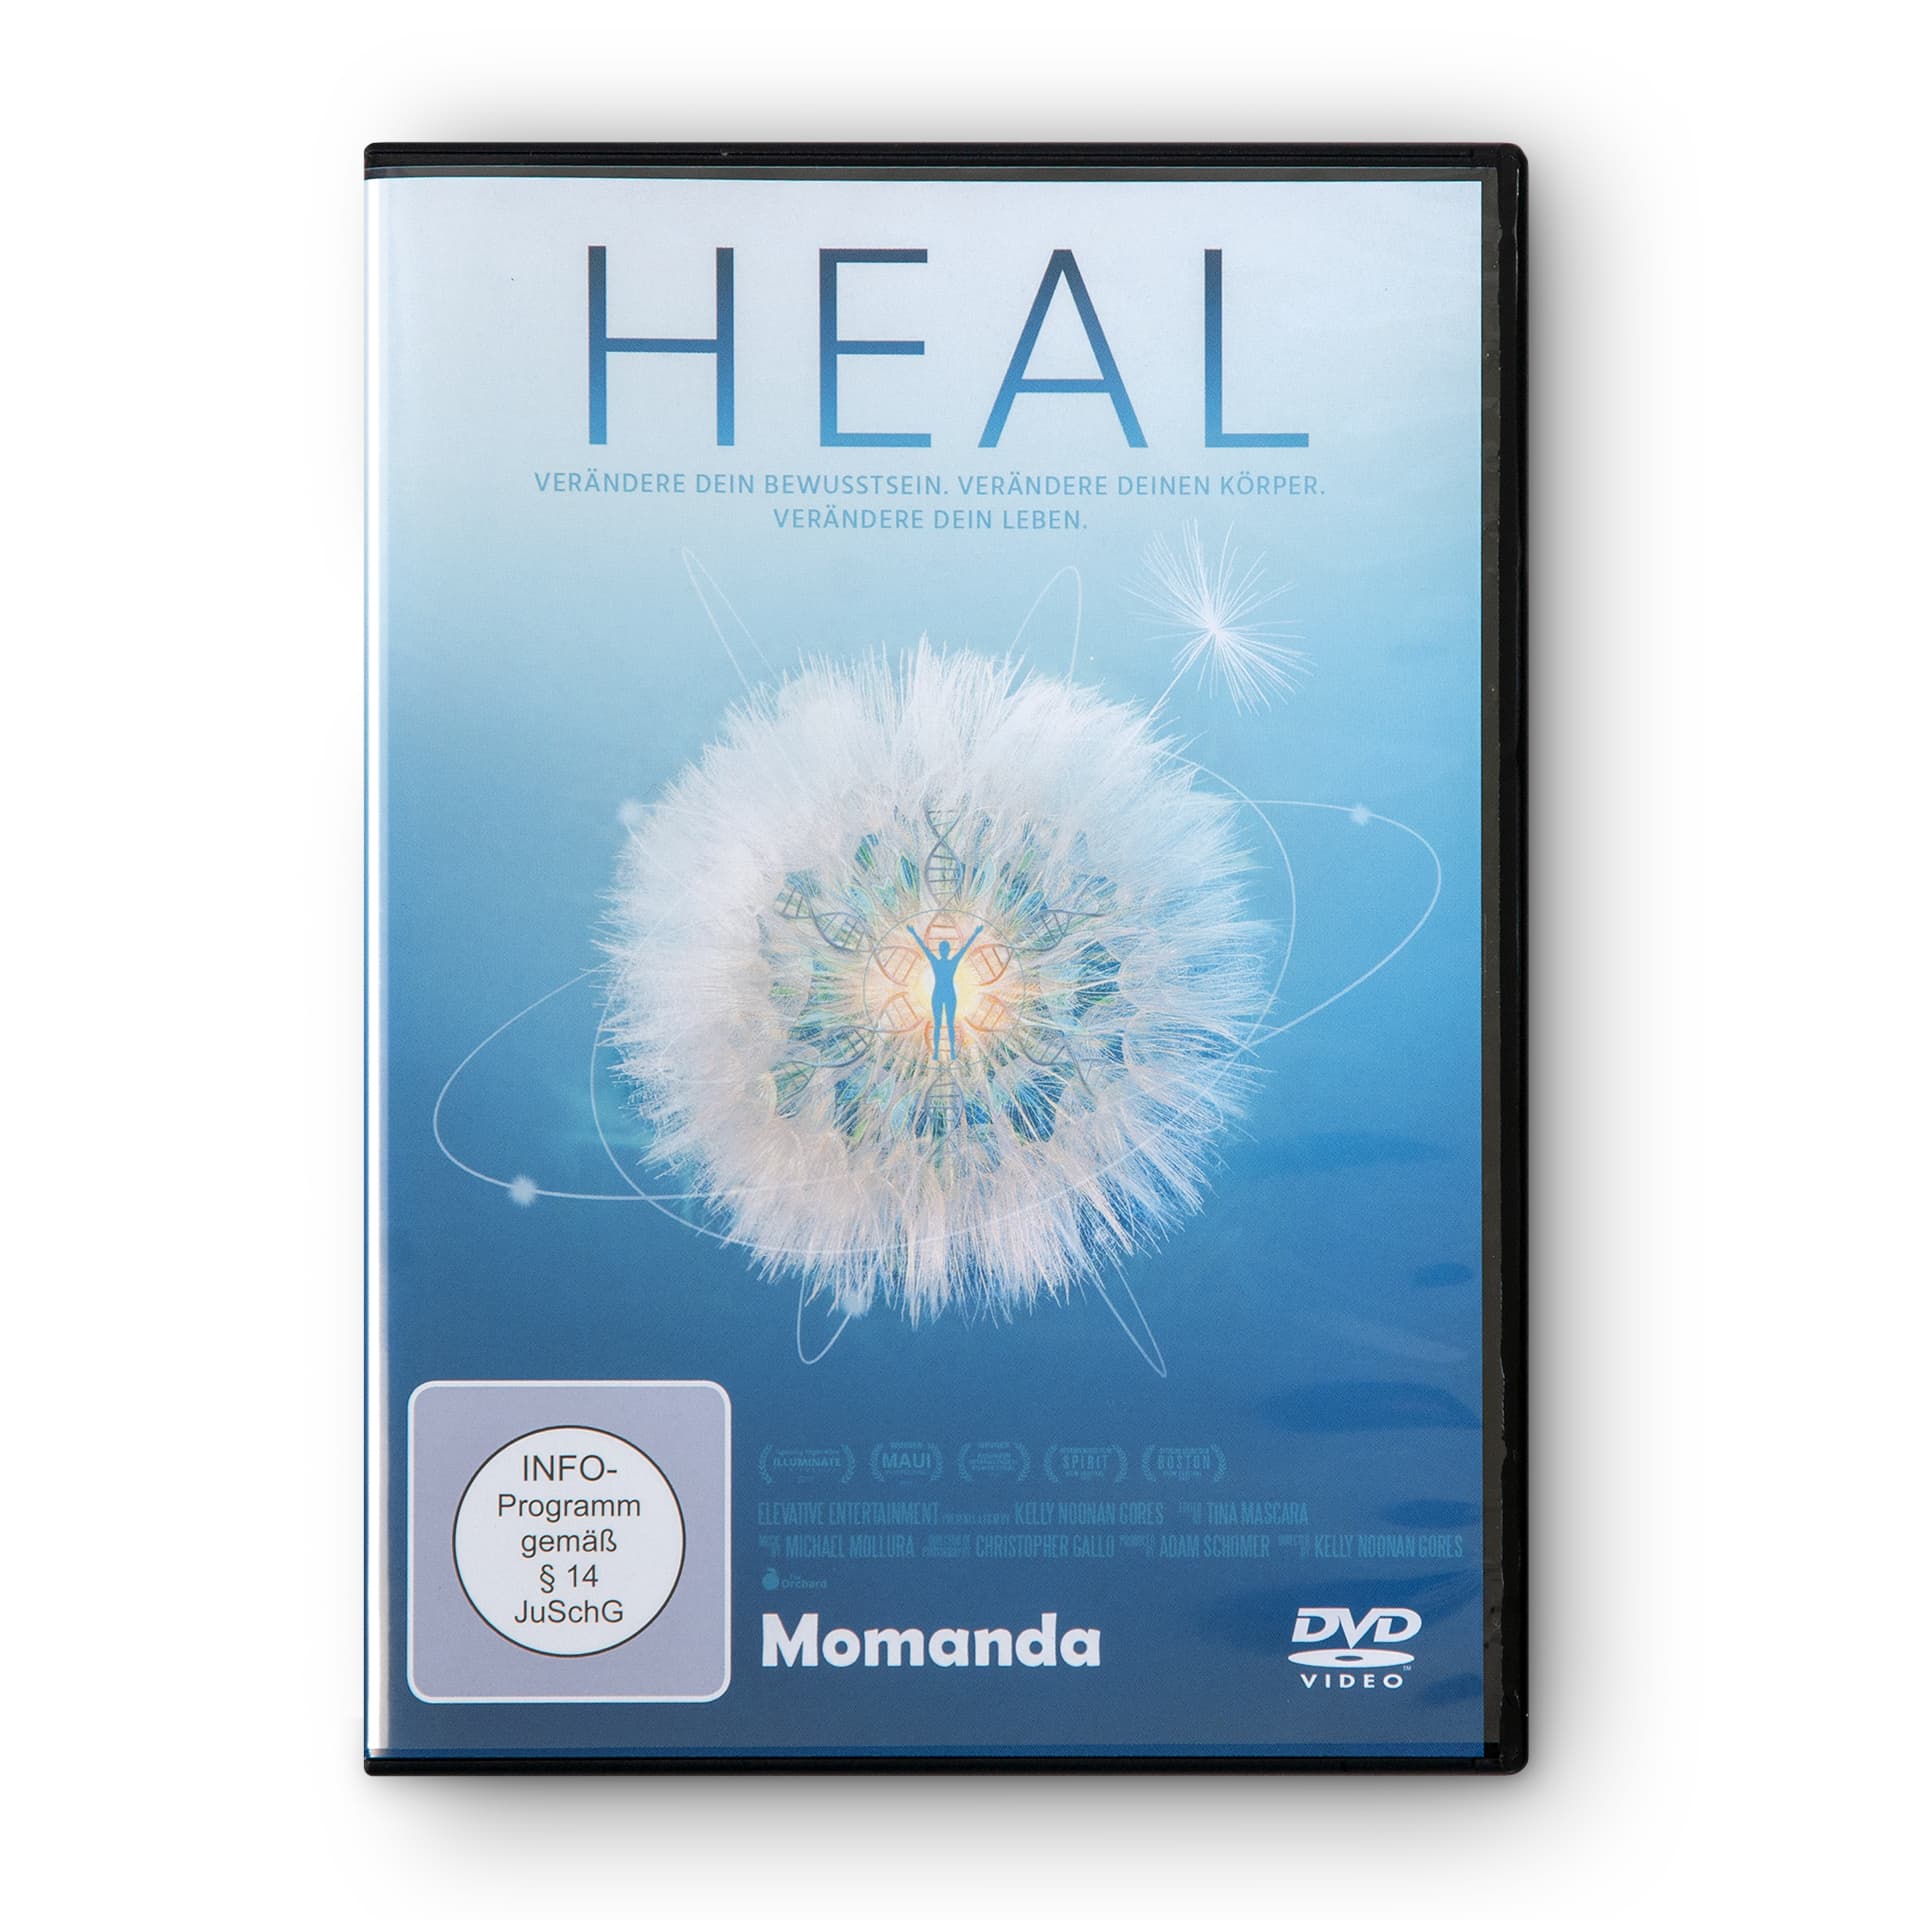 DVD Film "Heal"